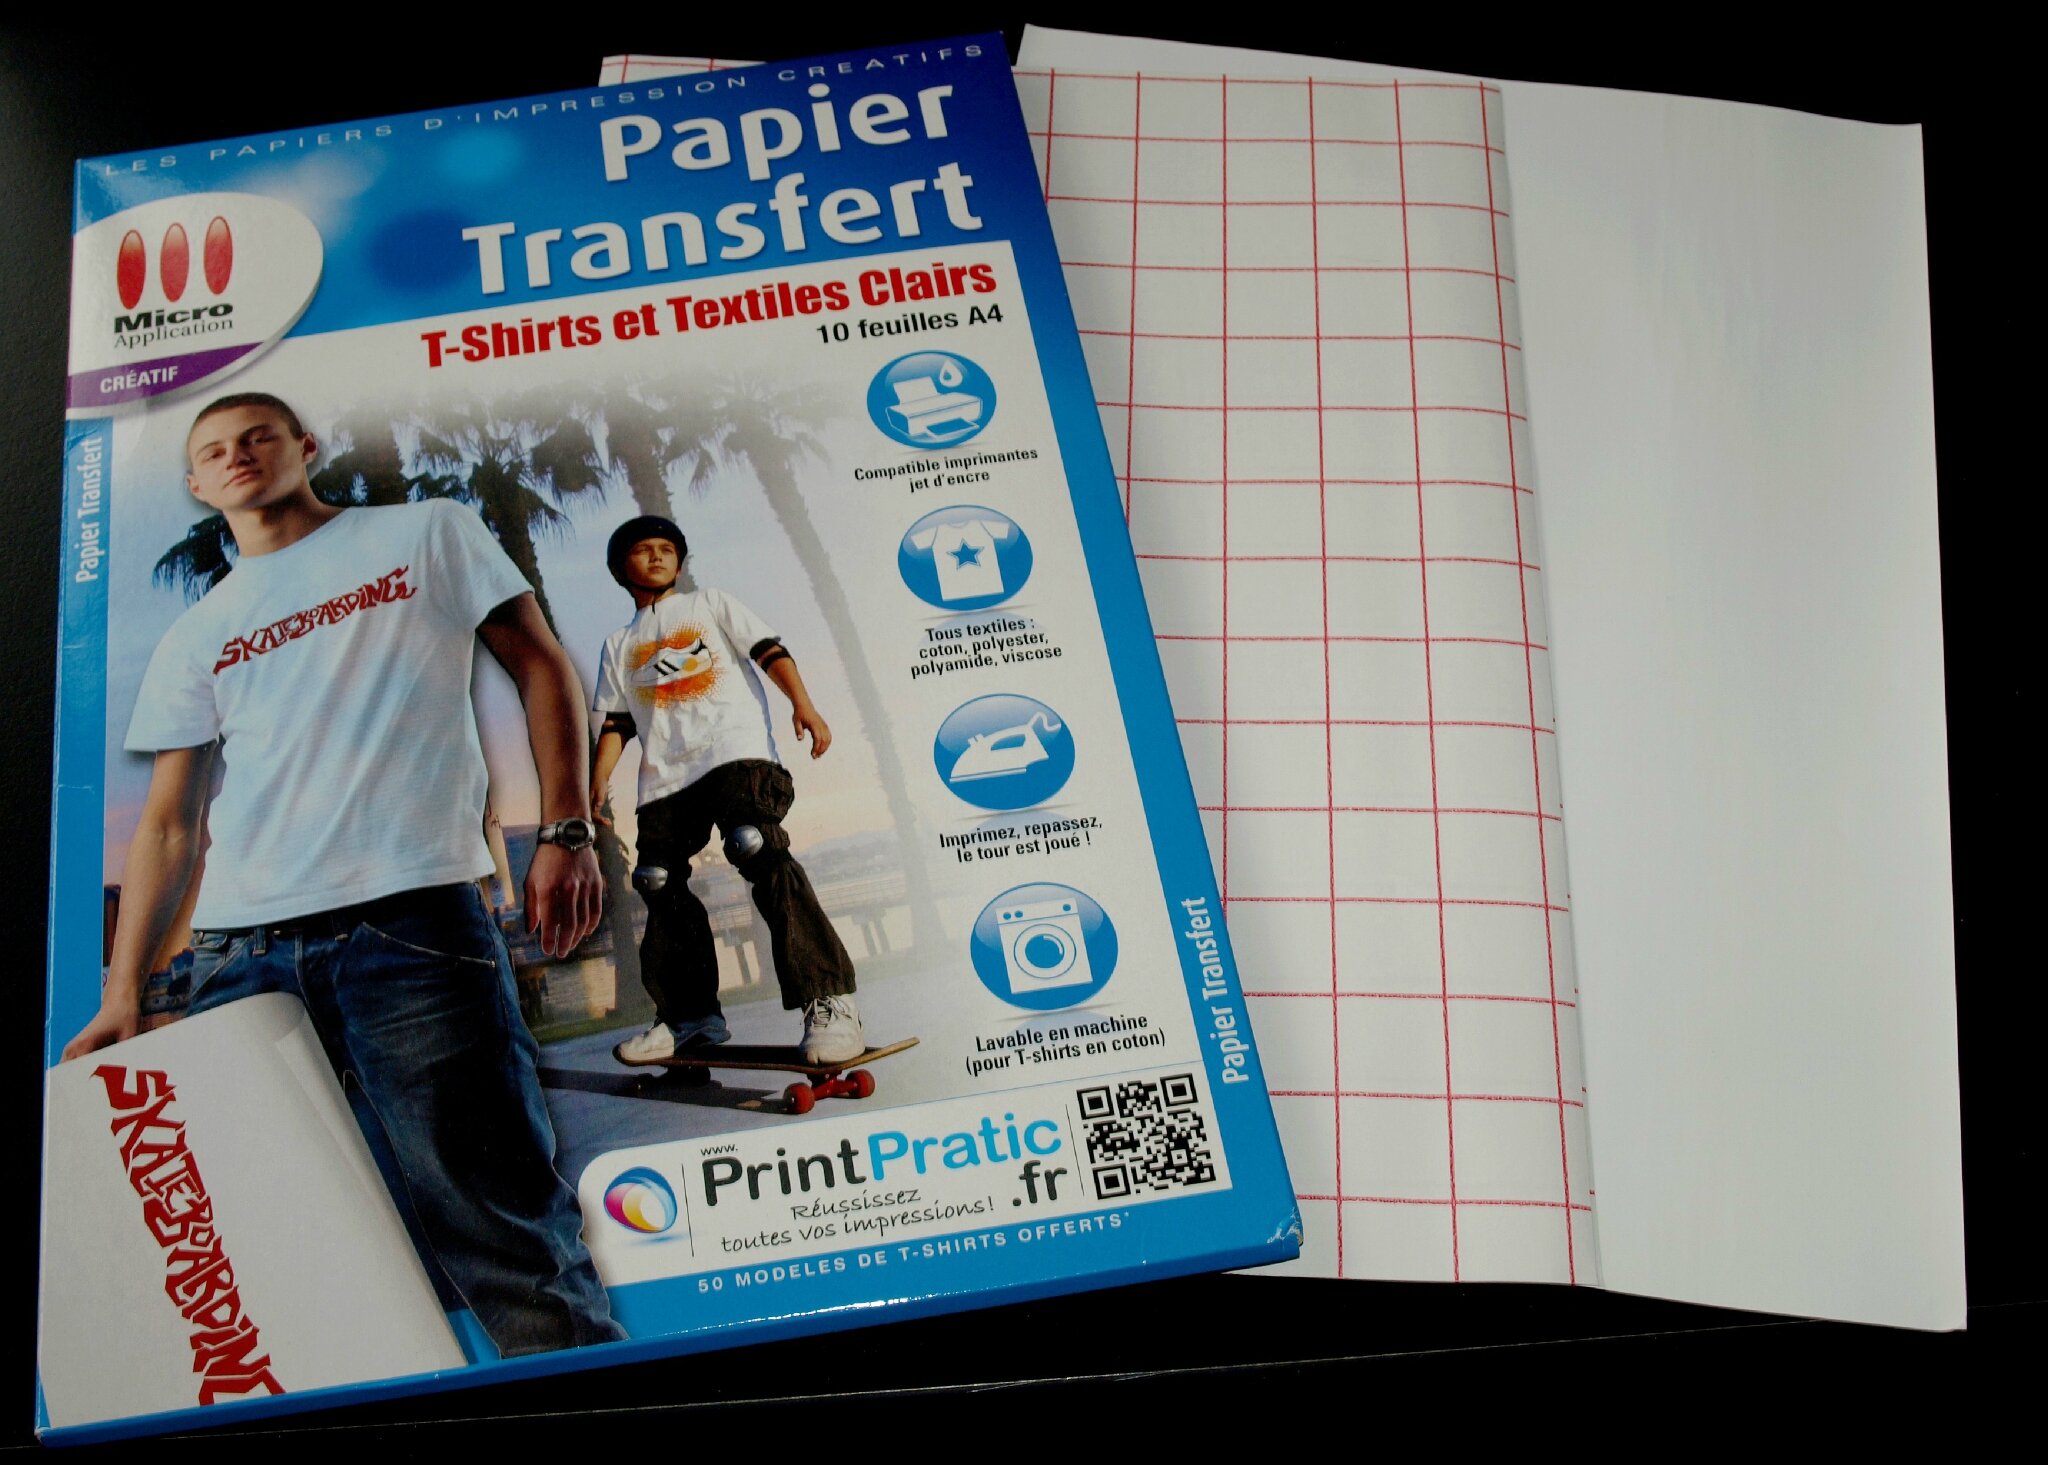 Papier transfert textiles - Micro Application 